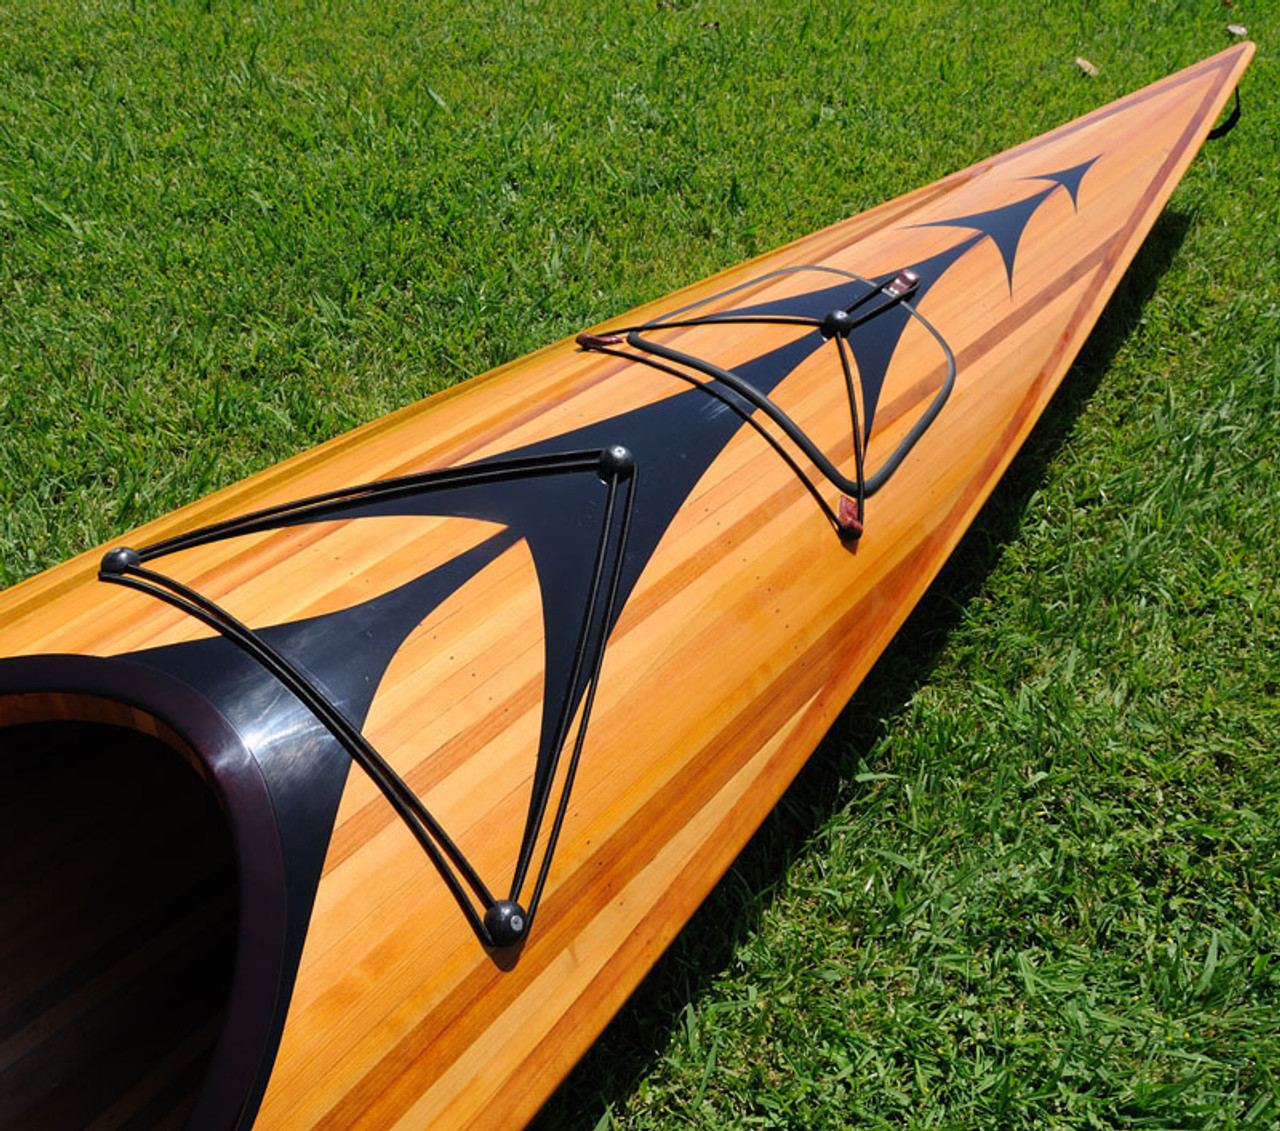 Wooden Kayak with Arrow Design - 17'